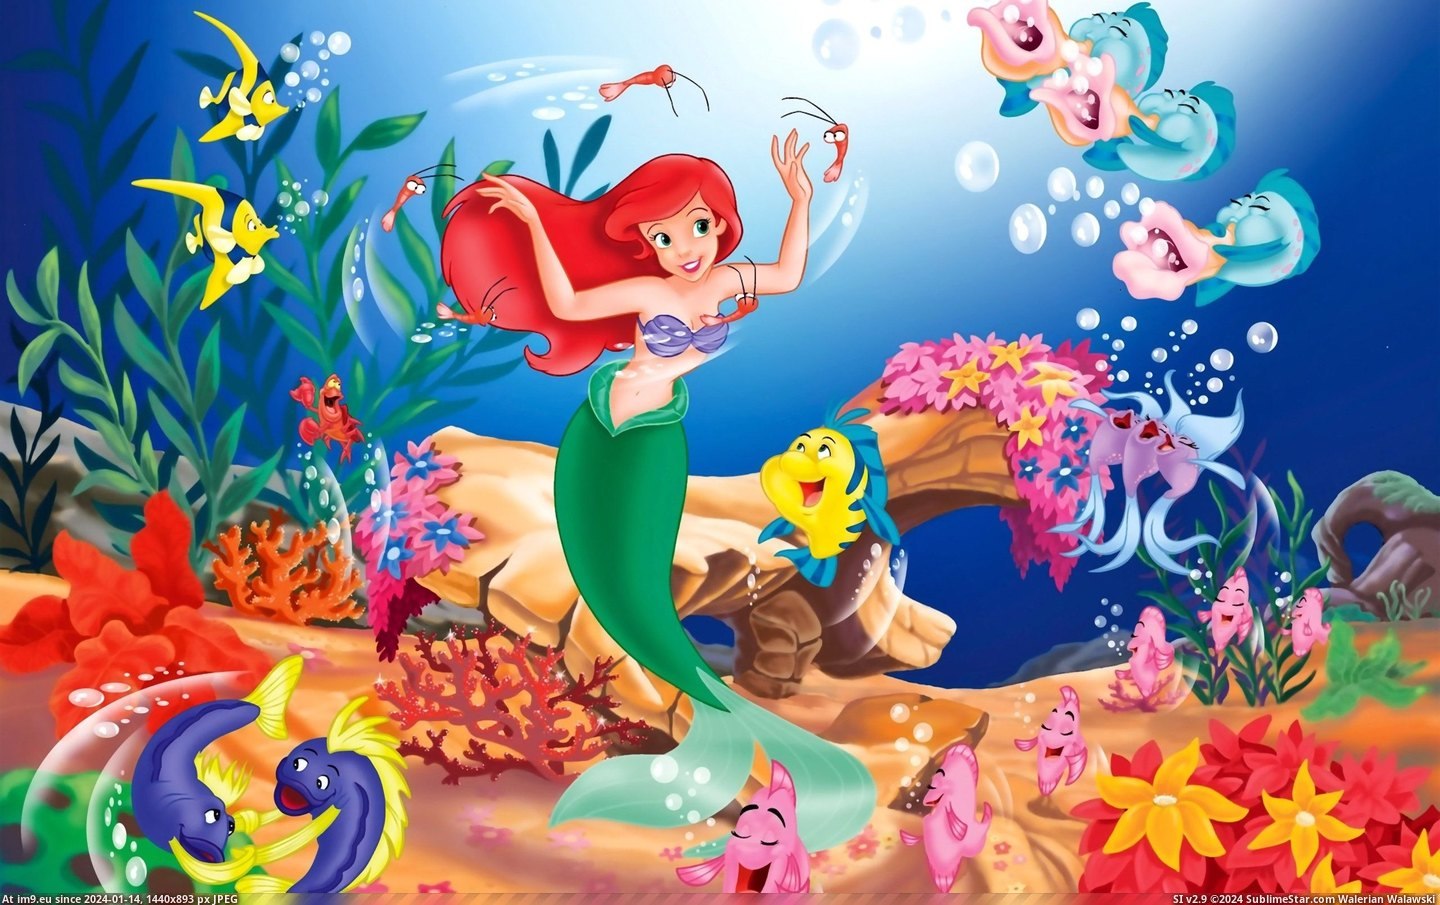 #Wallpaper #Disney #Mermaid #Wide Disney The Little Mermaid Wide HD Wallpaper Pic. (Obraz z album Unique HD Wallpapers))